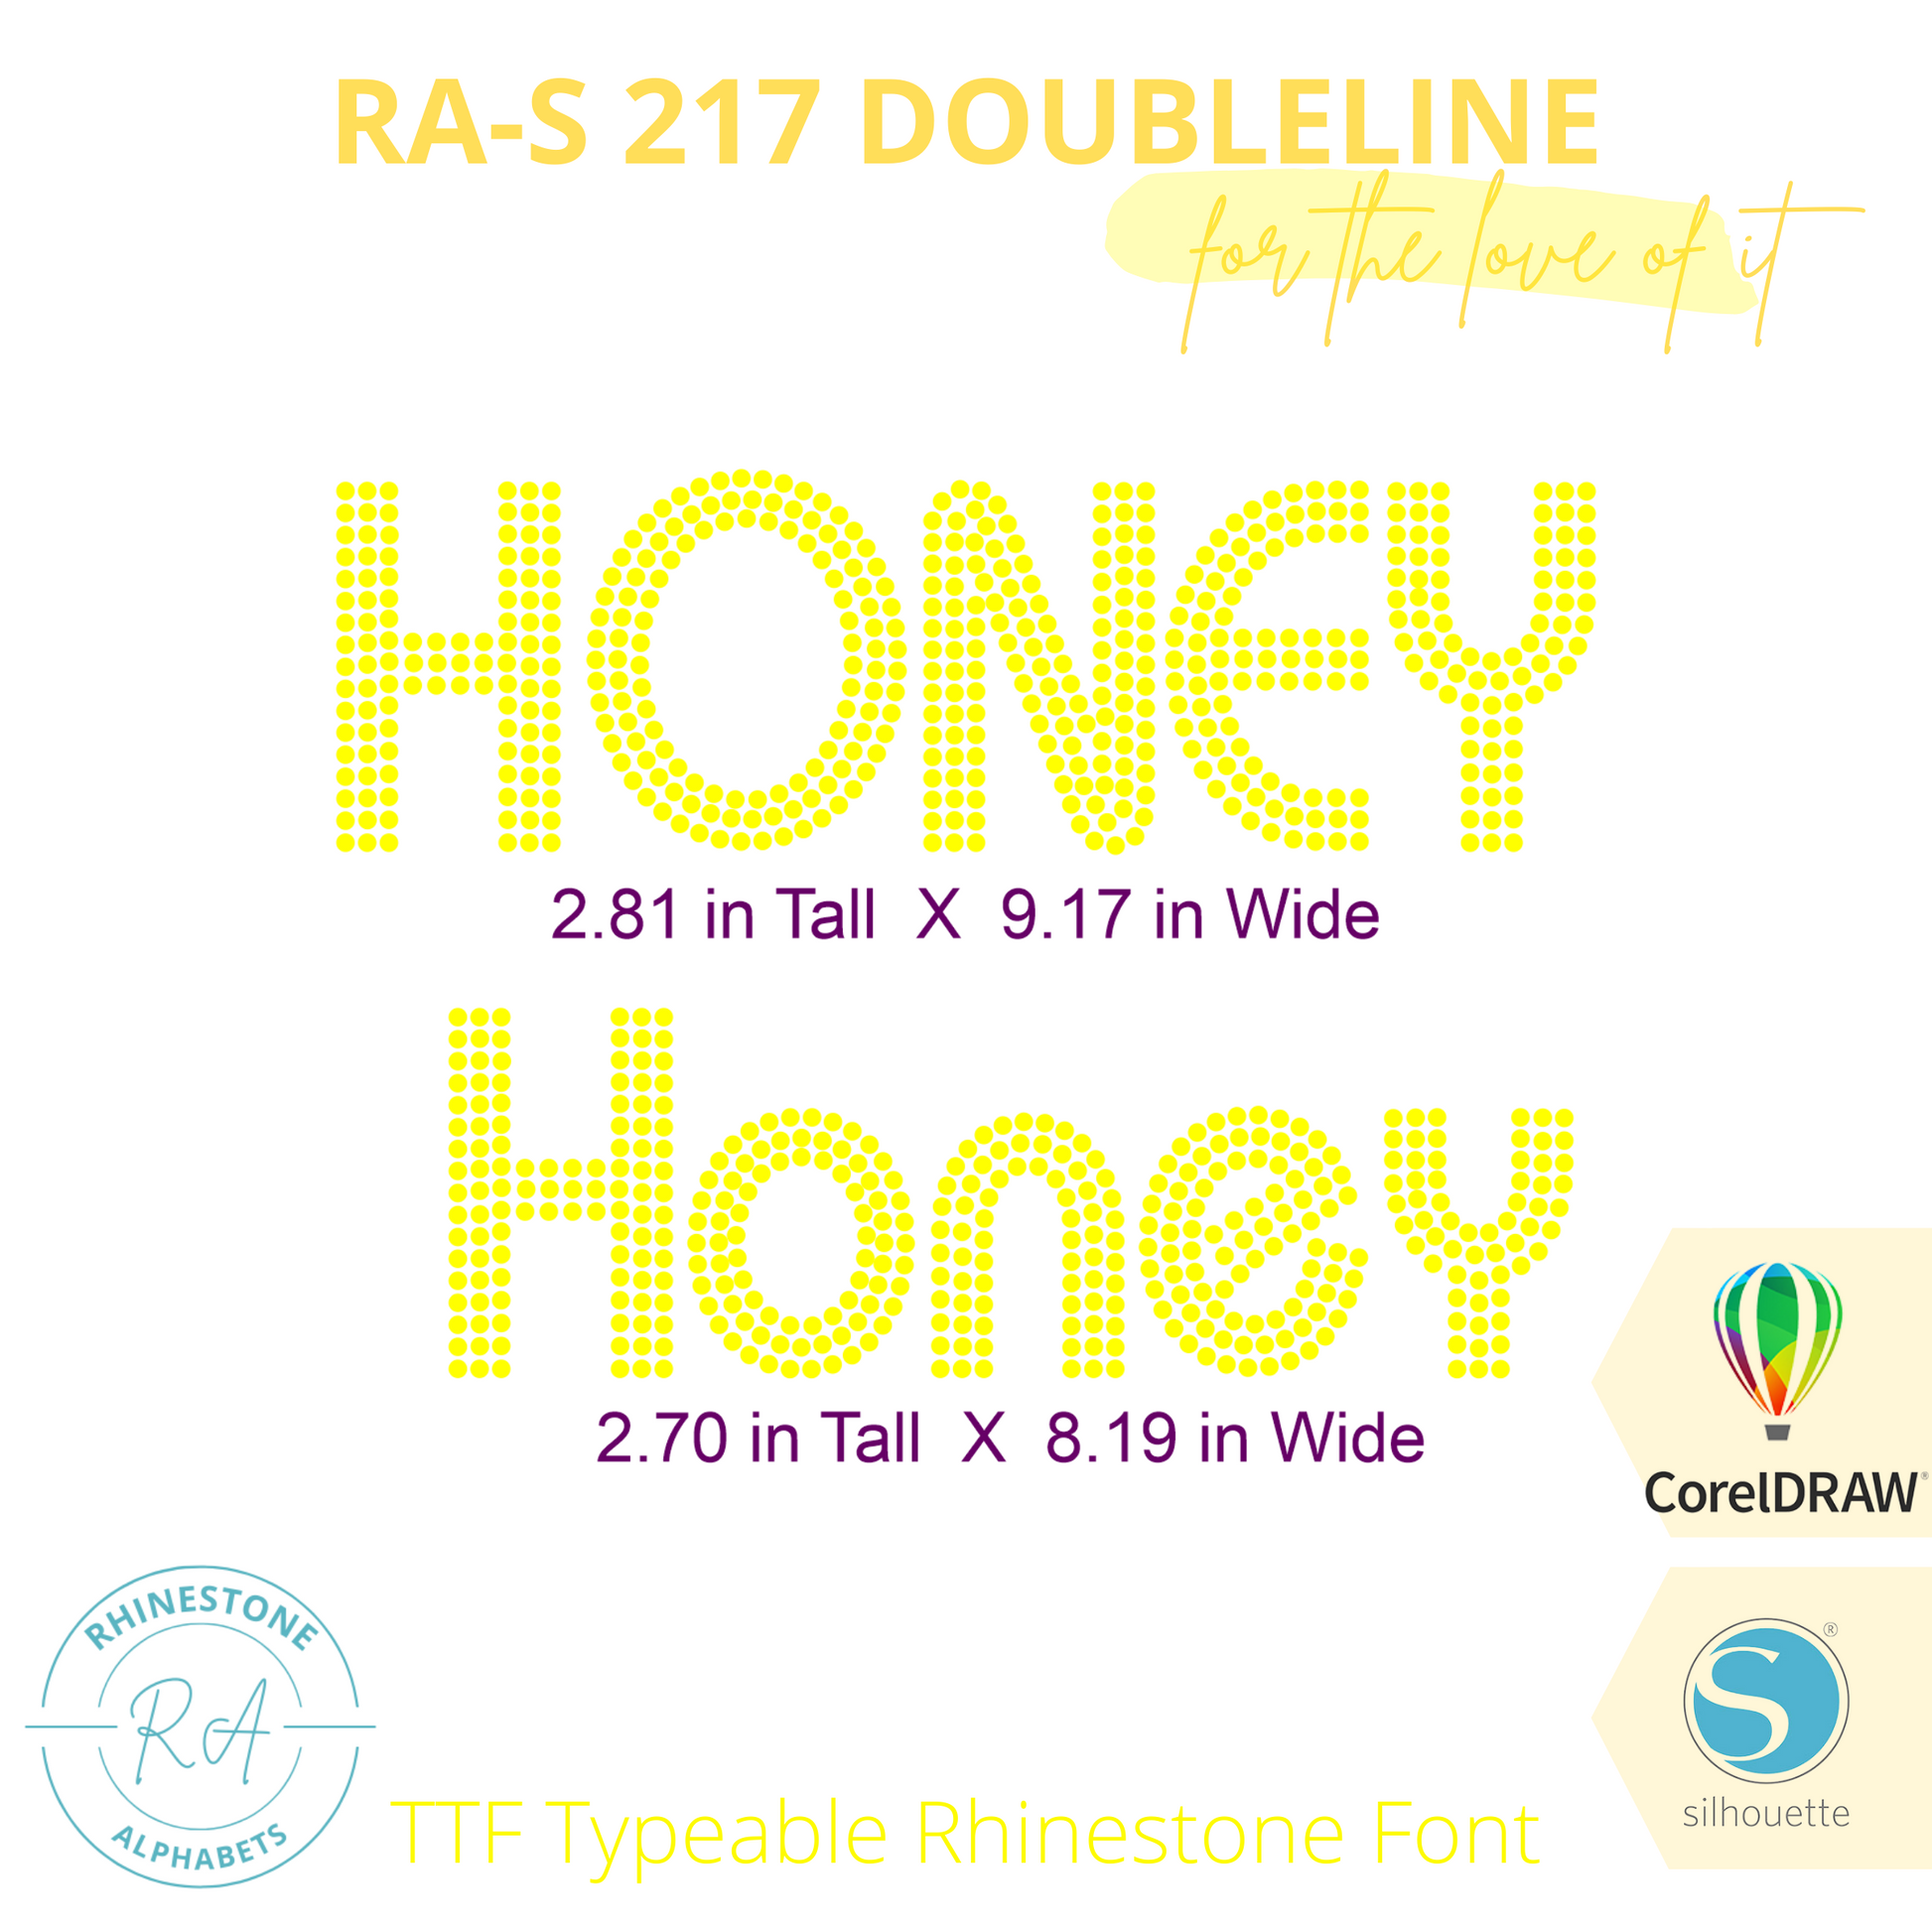 RA-S 217 Doubleline - RhinestoneAlphabets